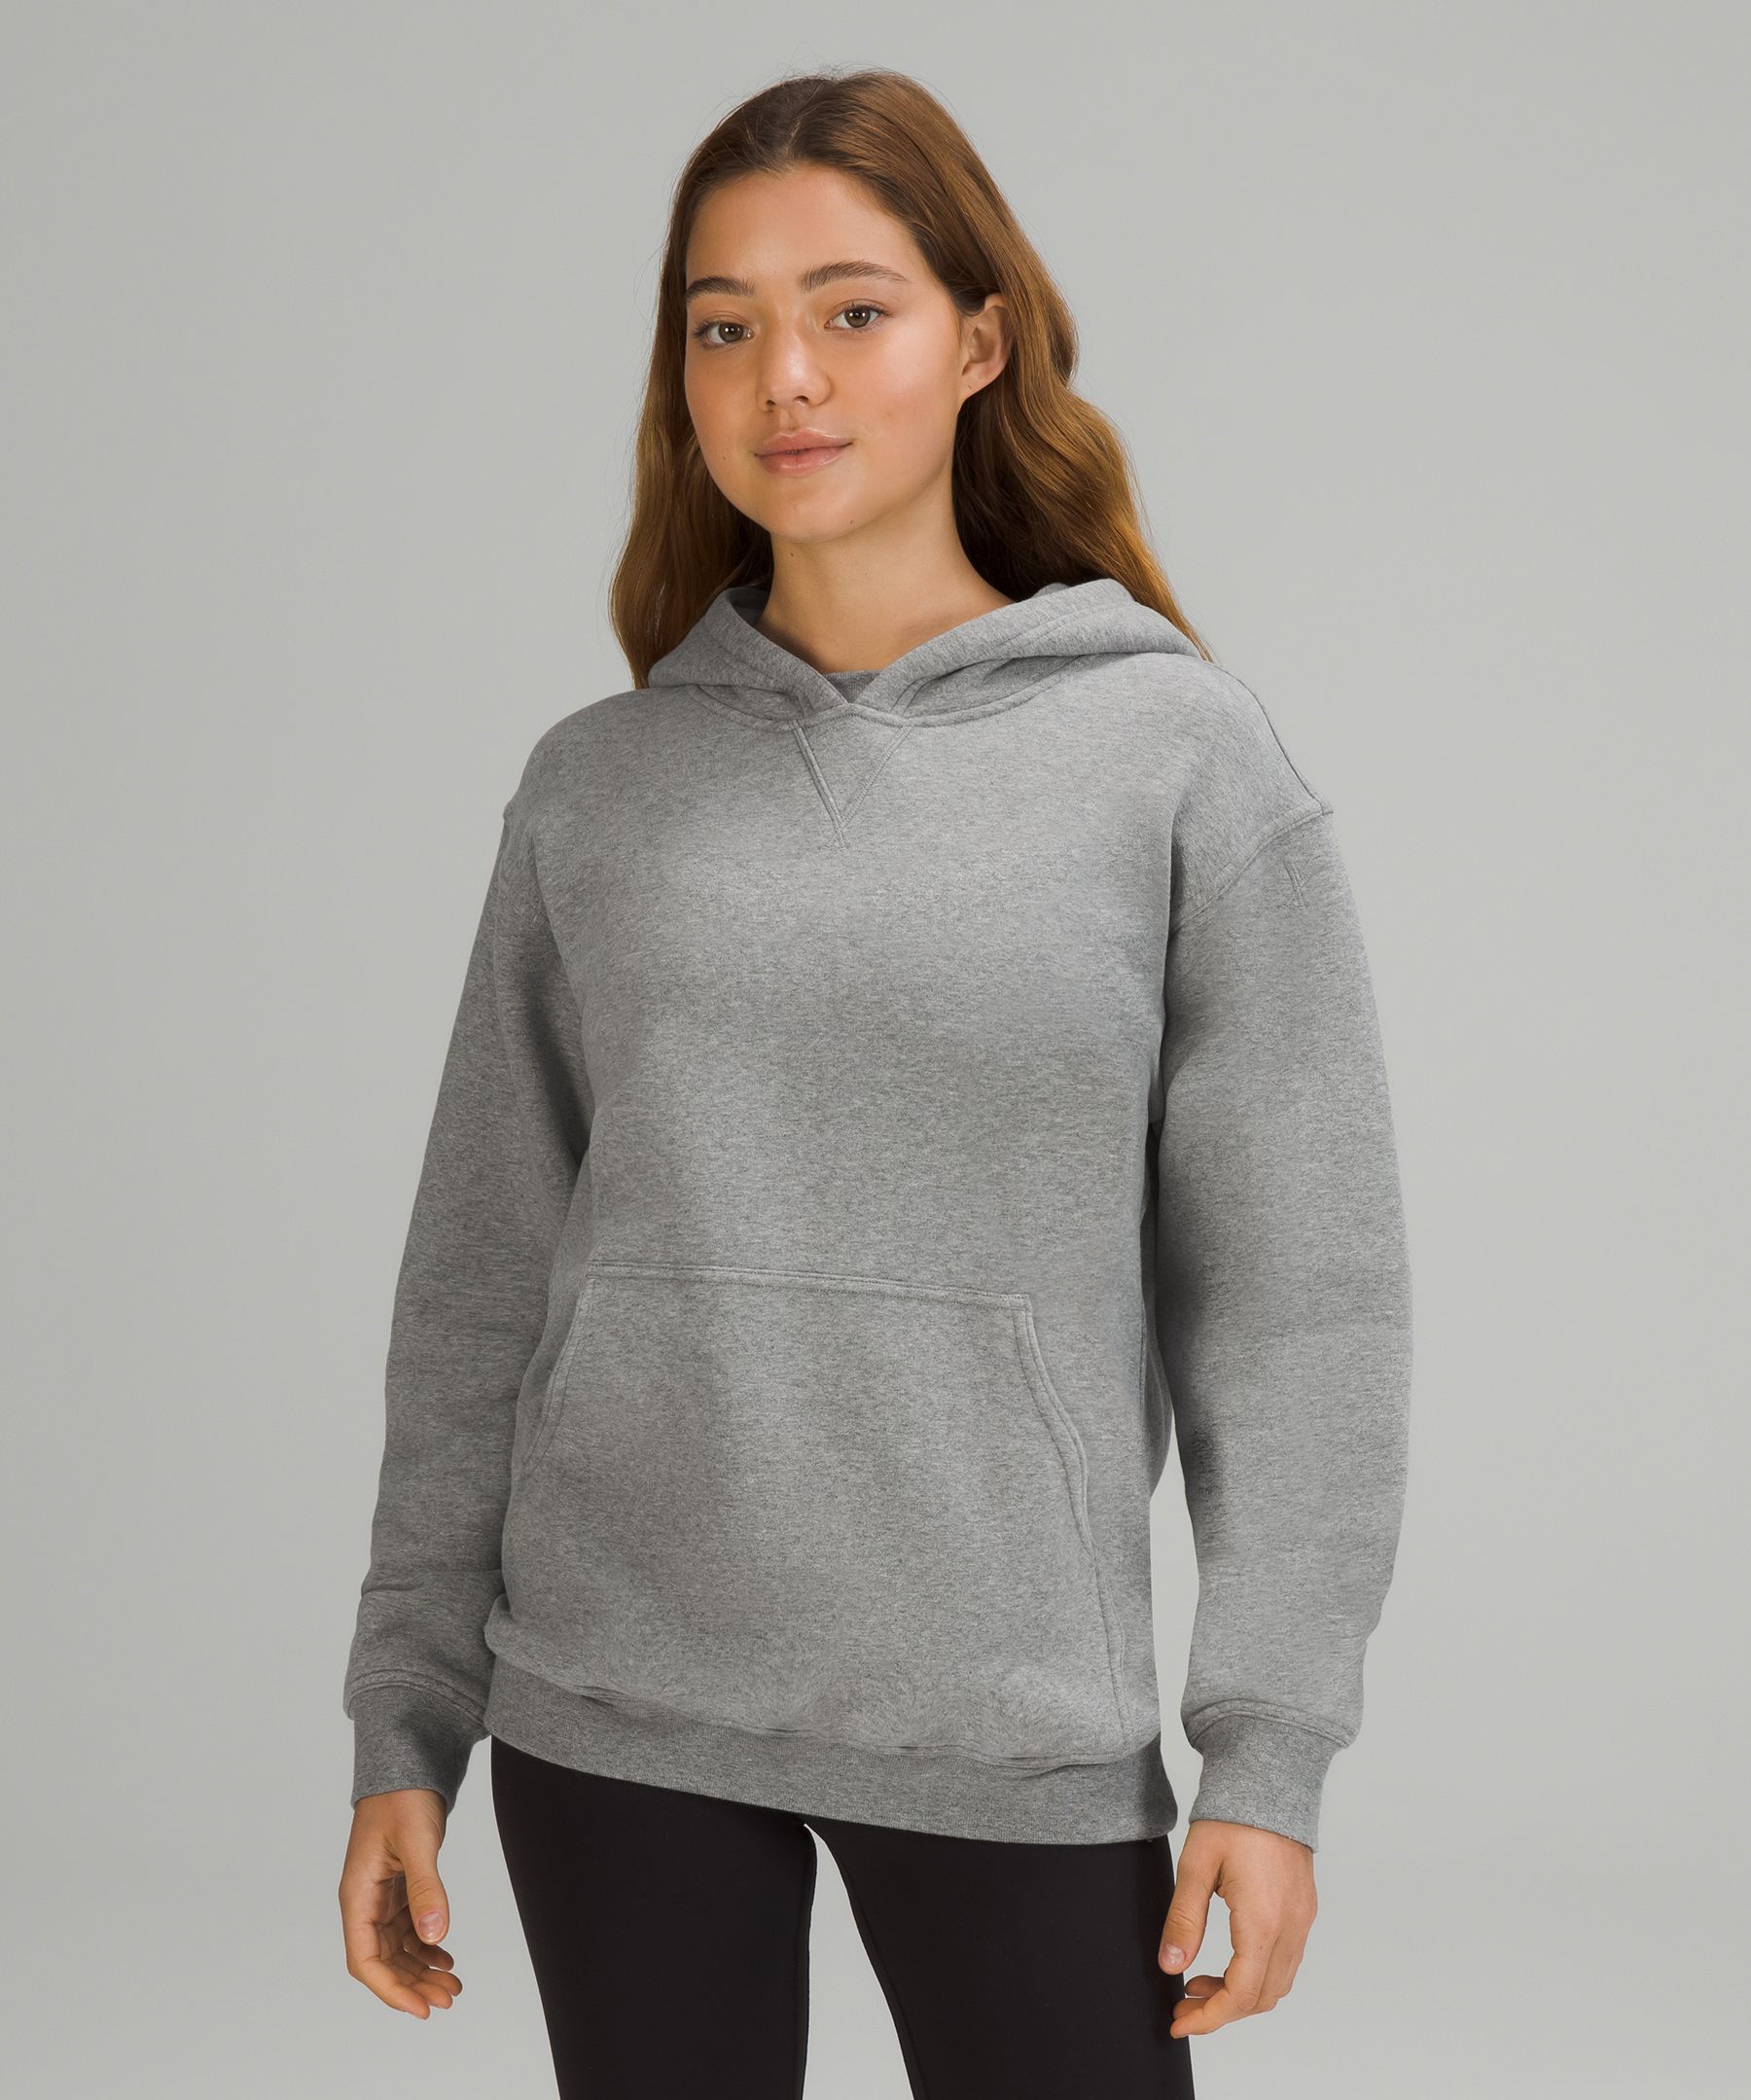 lululemon zip up sweater